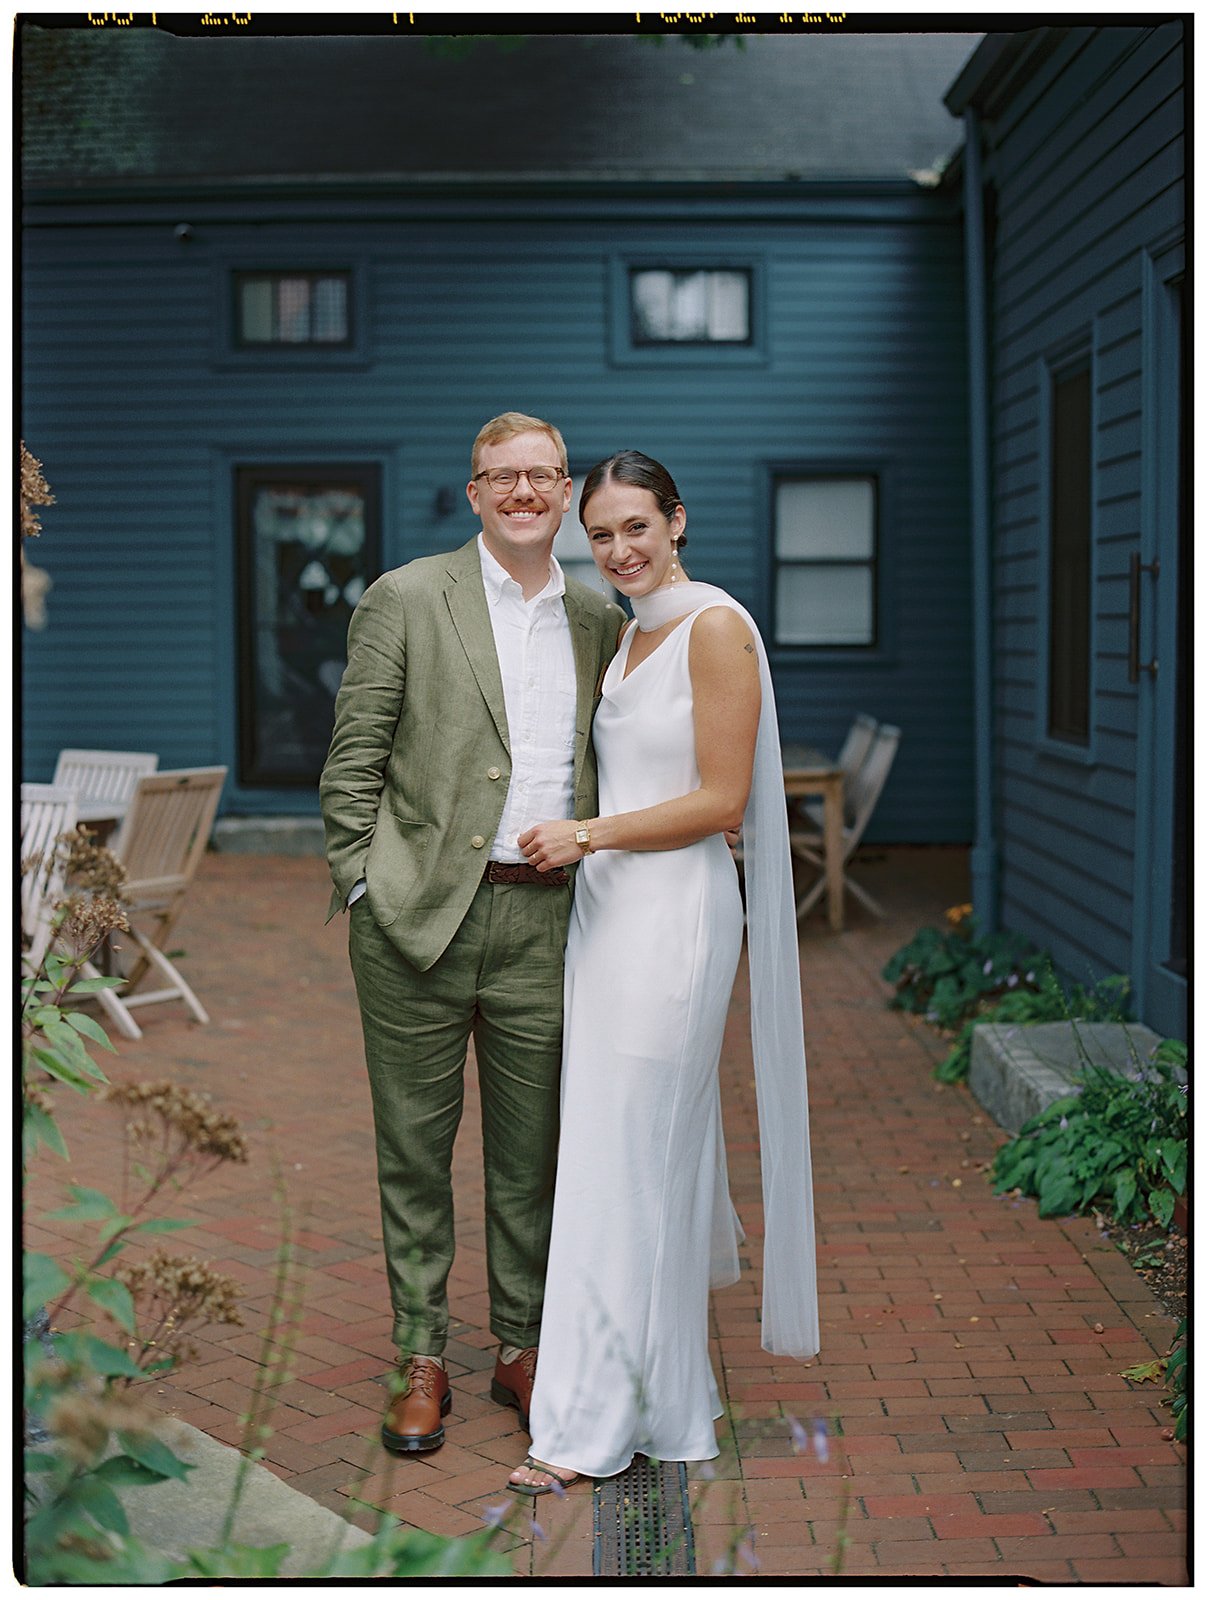 Best-Film-35mm-Austin-Wedding-Photographer-Portland-Maine-City-Hall-Super8-34.jpg